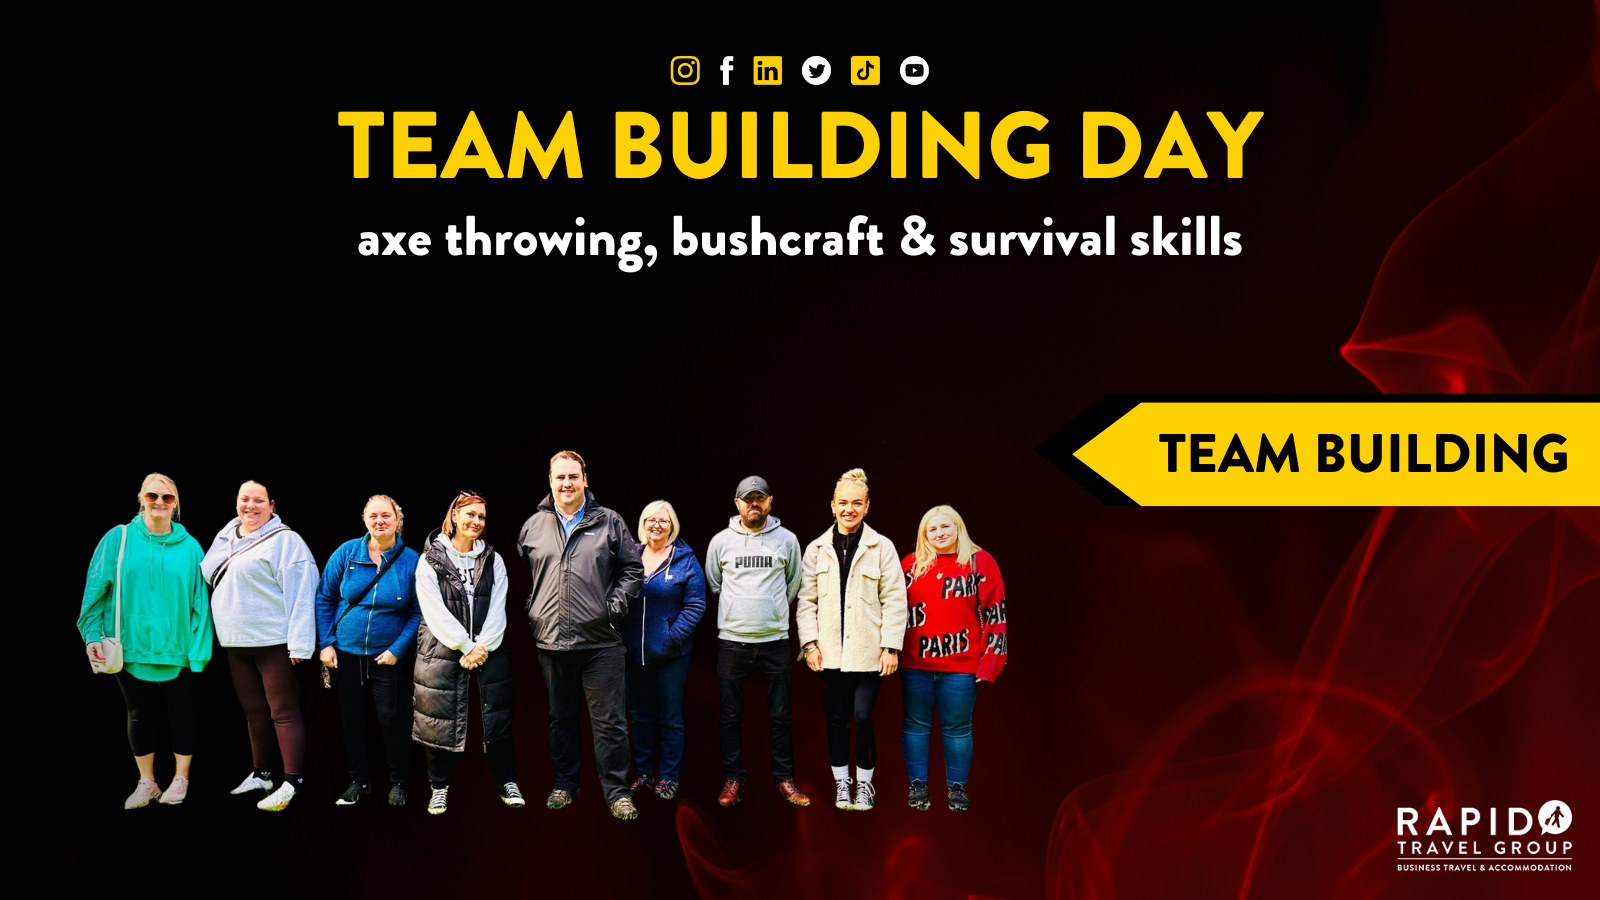 Team Building Day axe throwing, bushcraft & survival skills